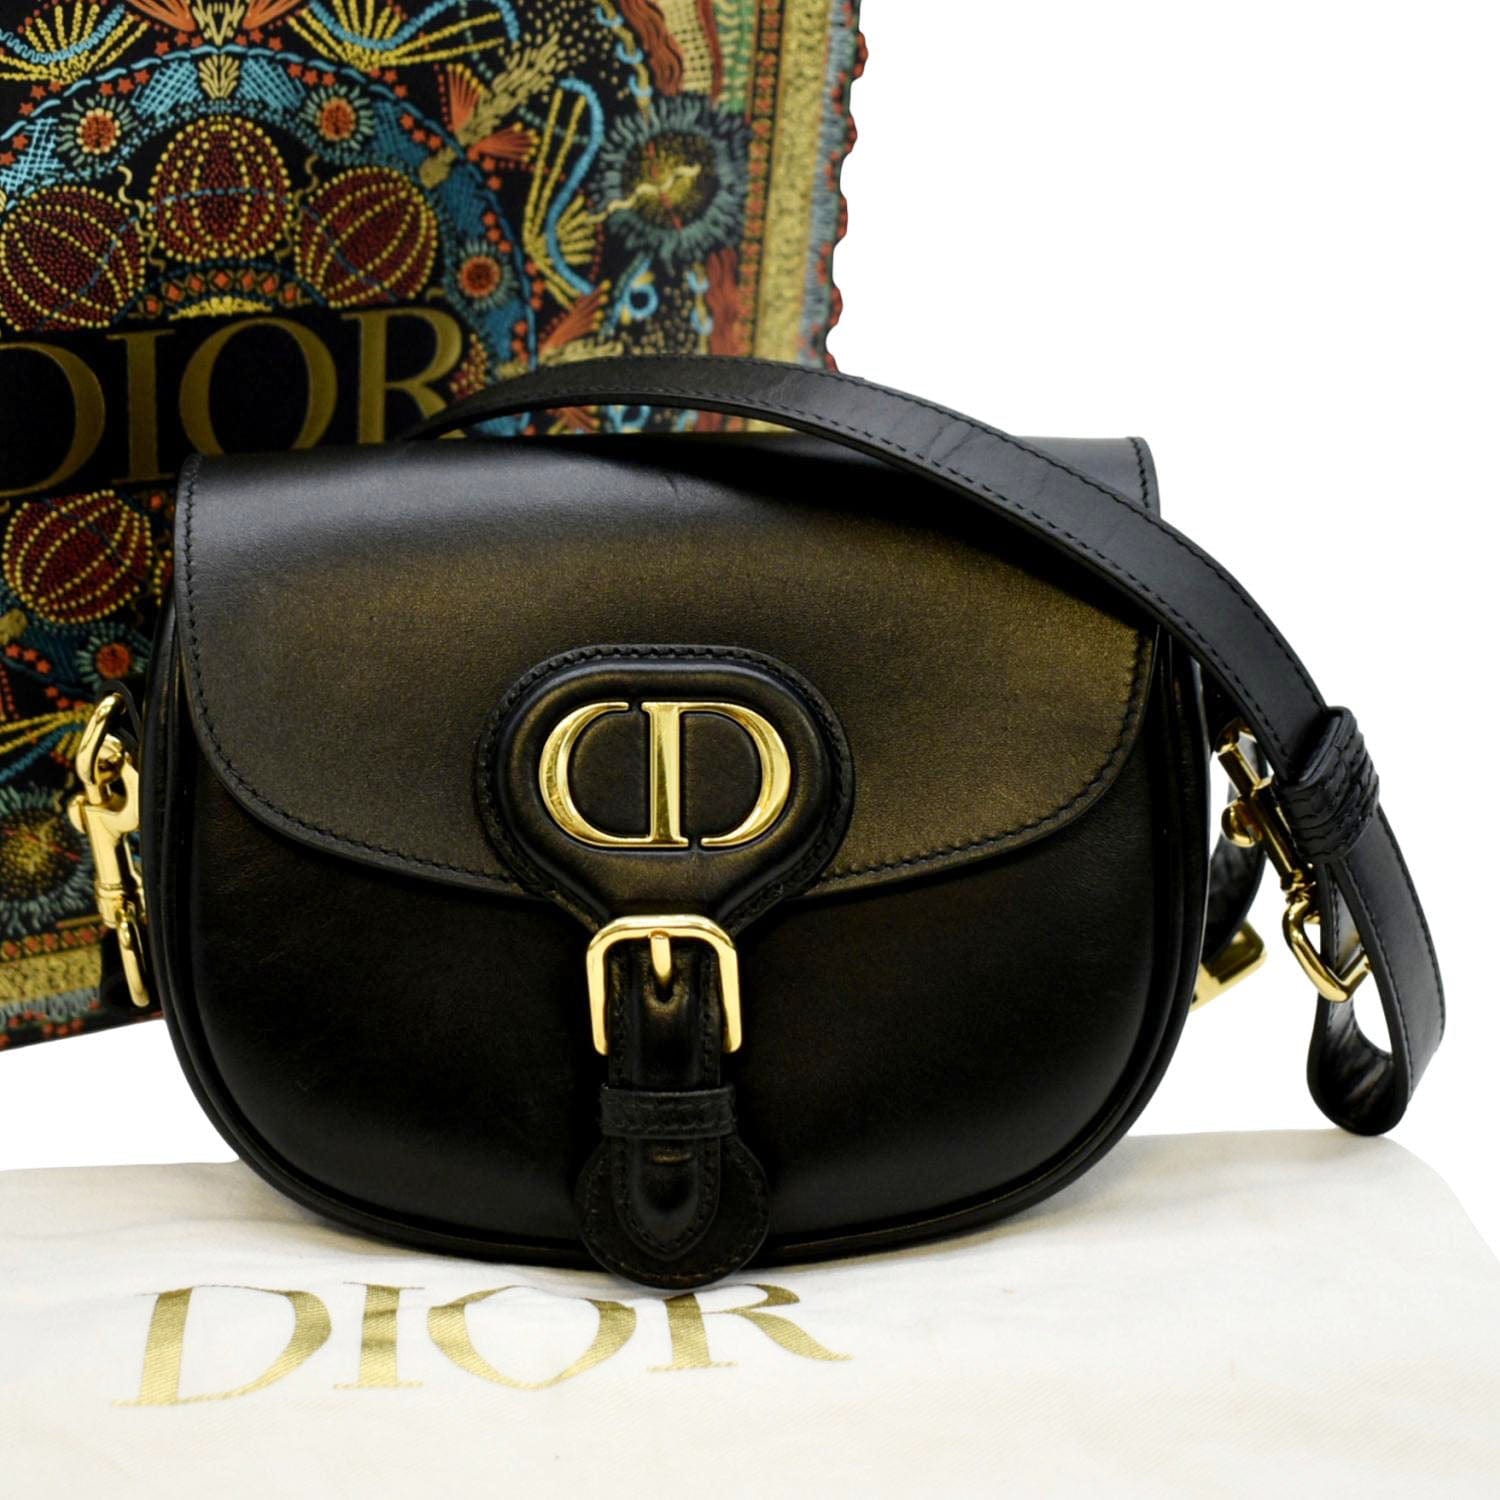 The New Dior Bobby Bag